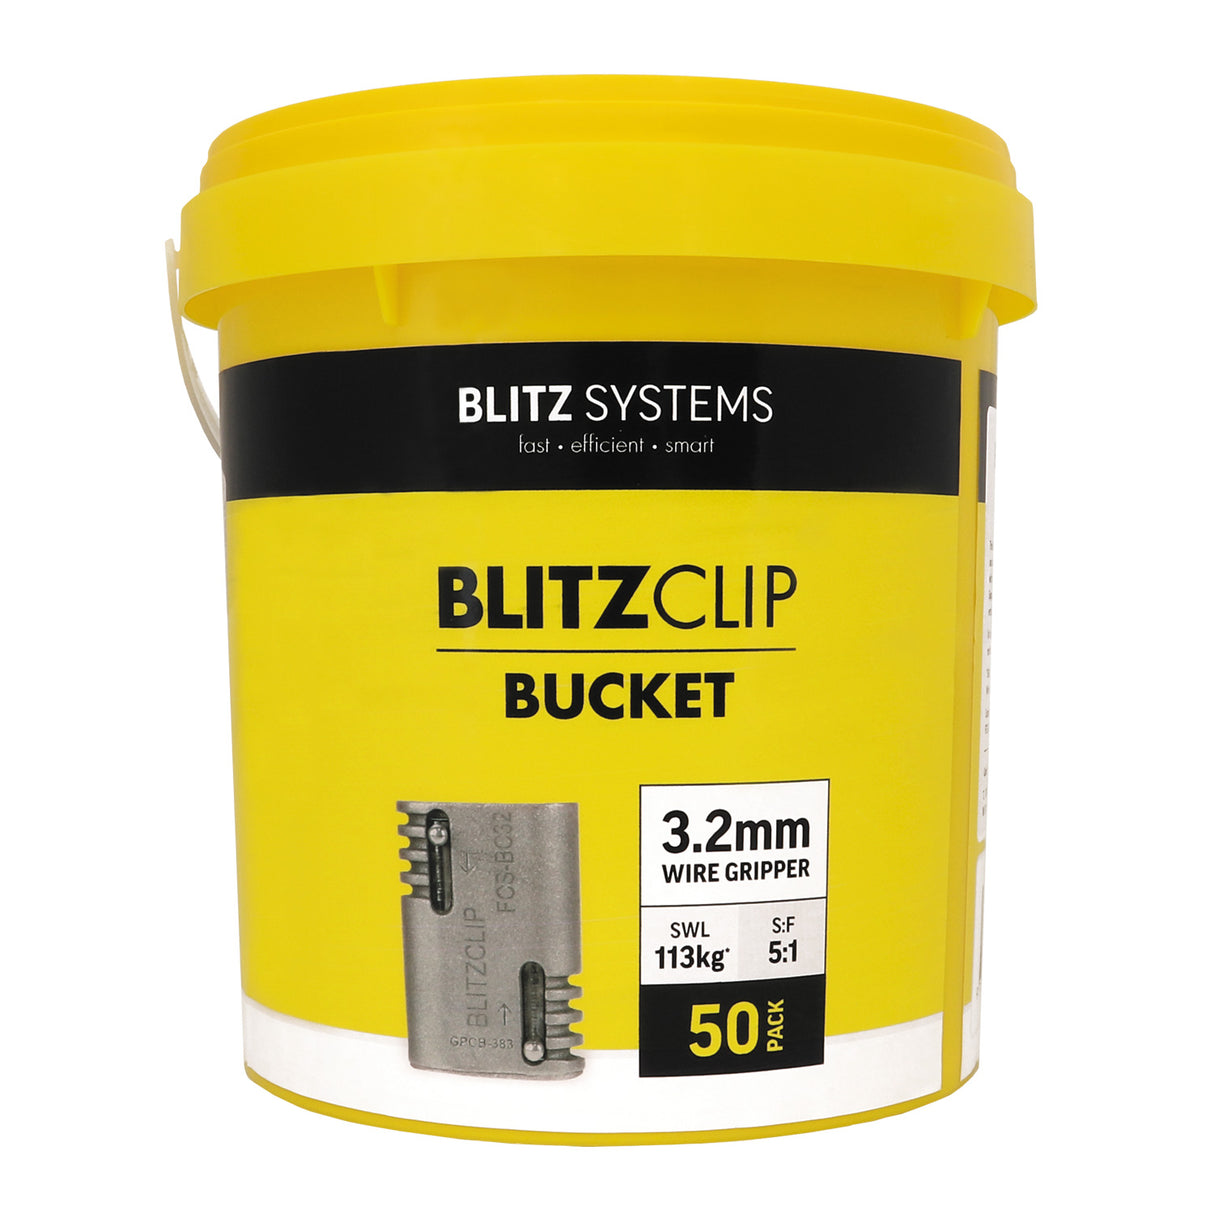 BLITZCLIP Bucket - 3.2mm Wire Gripper x 50 Pcs (2.4-3.2mm)